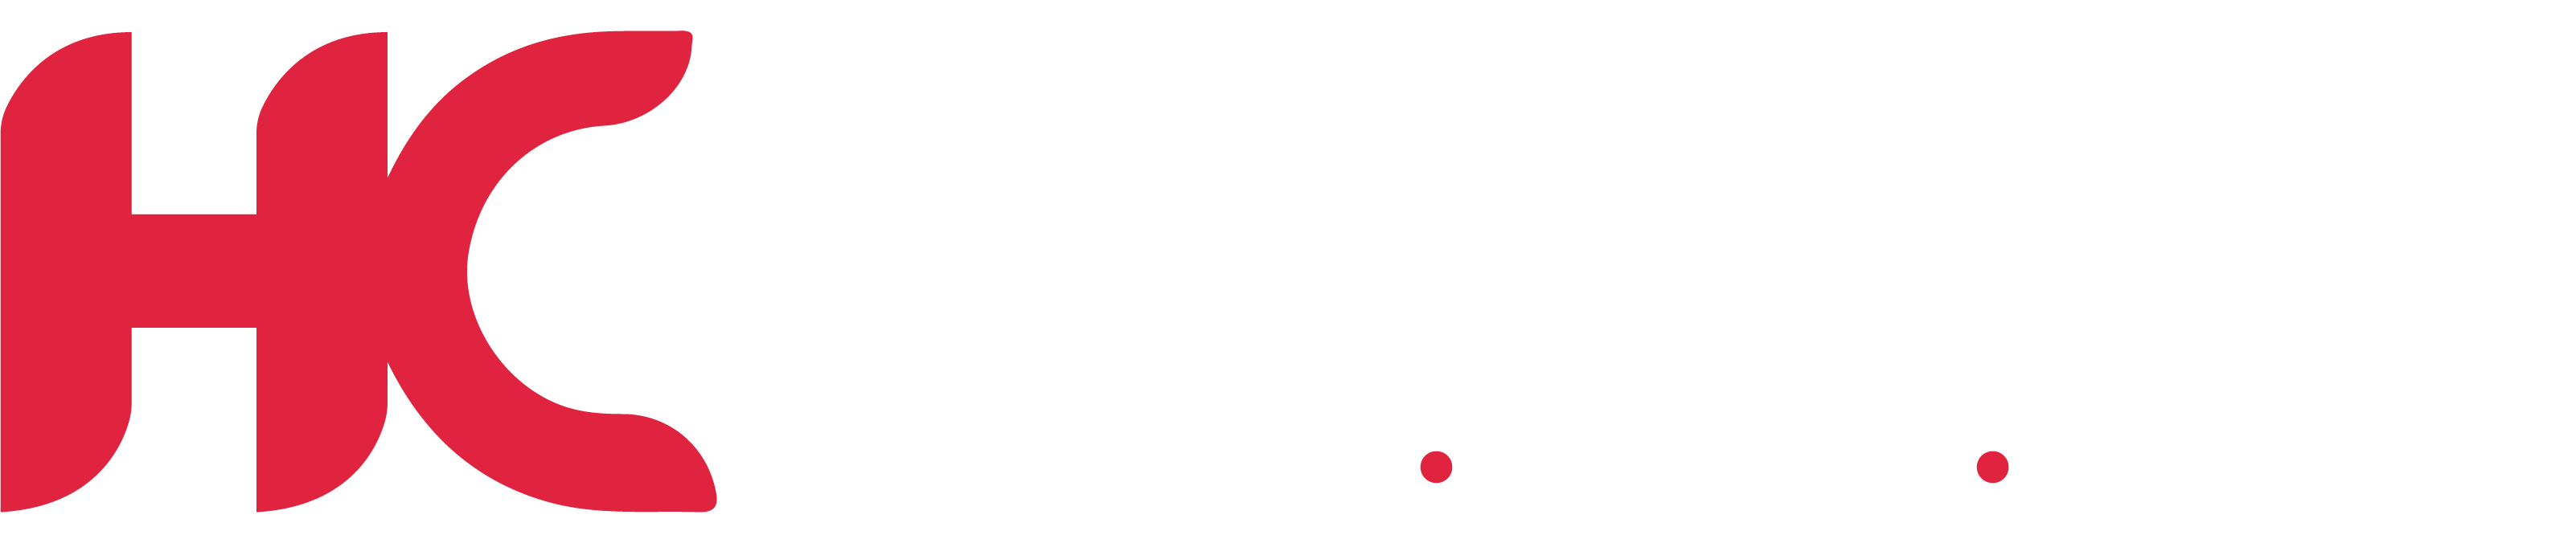 holyculture.net - logo